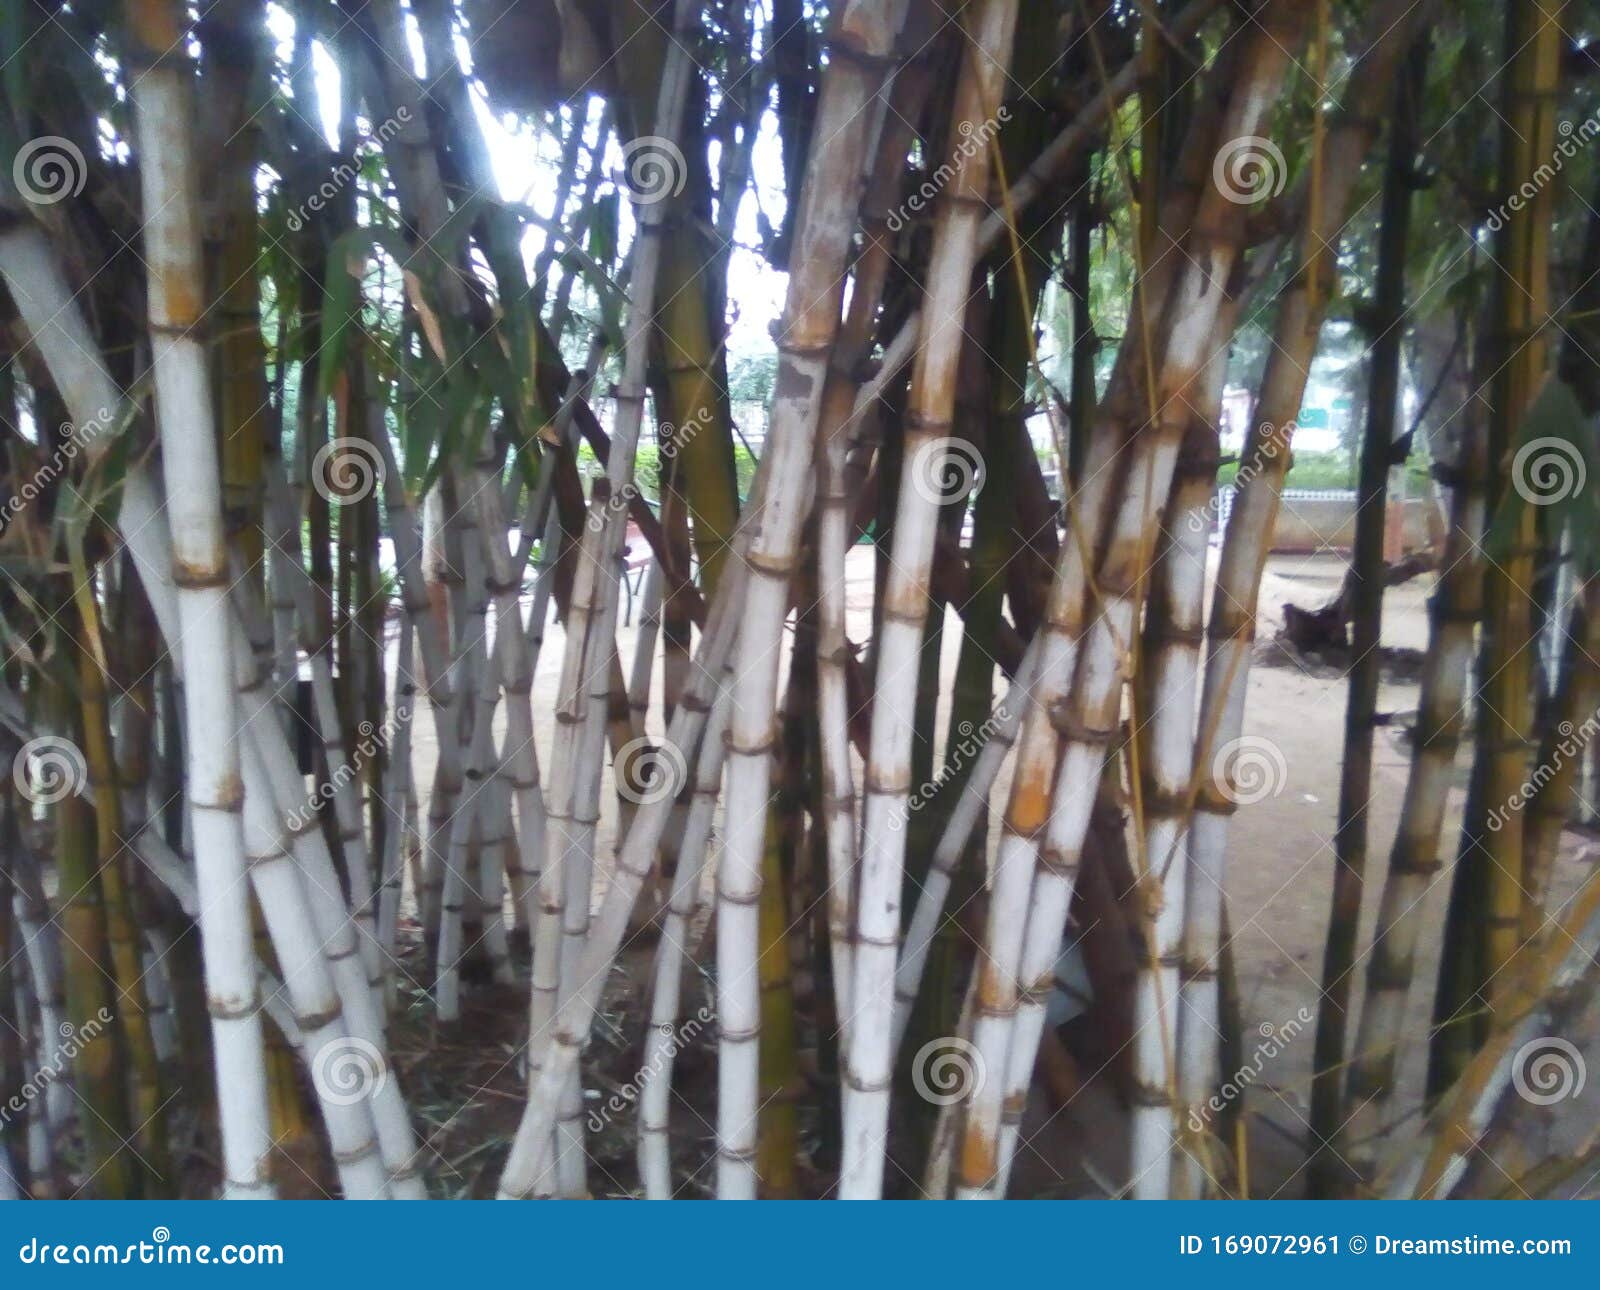 the bambu